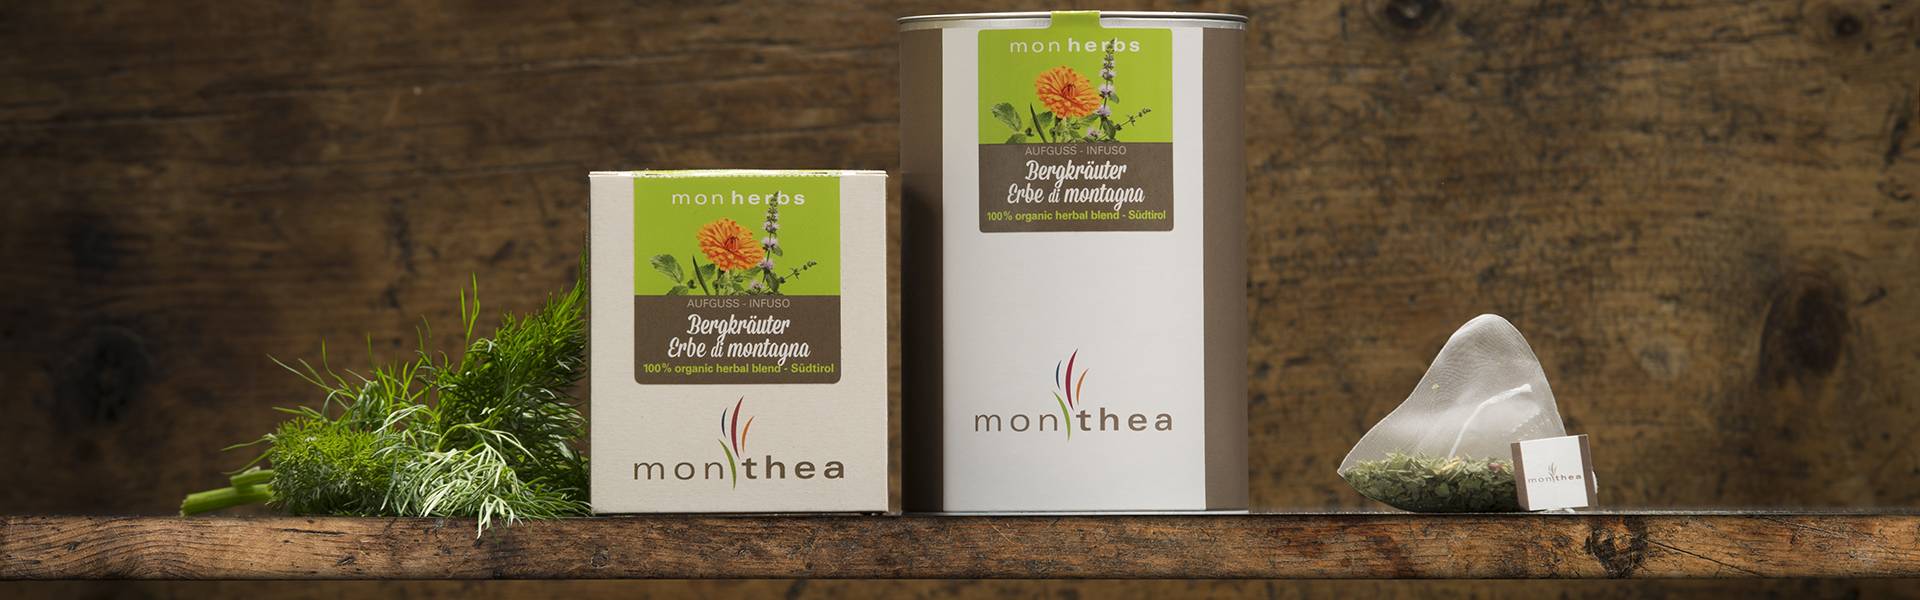 Organic mountain herbs tea monherbs